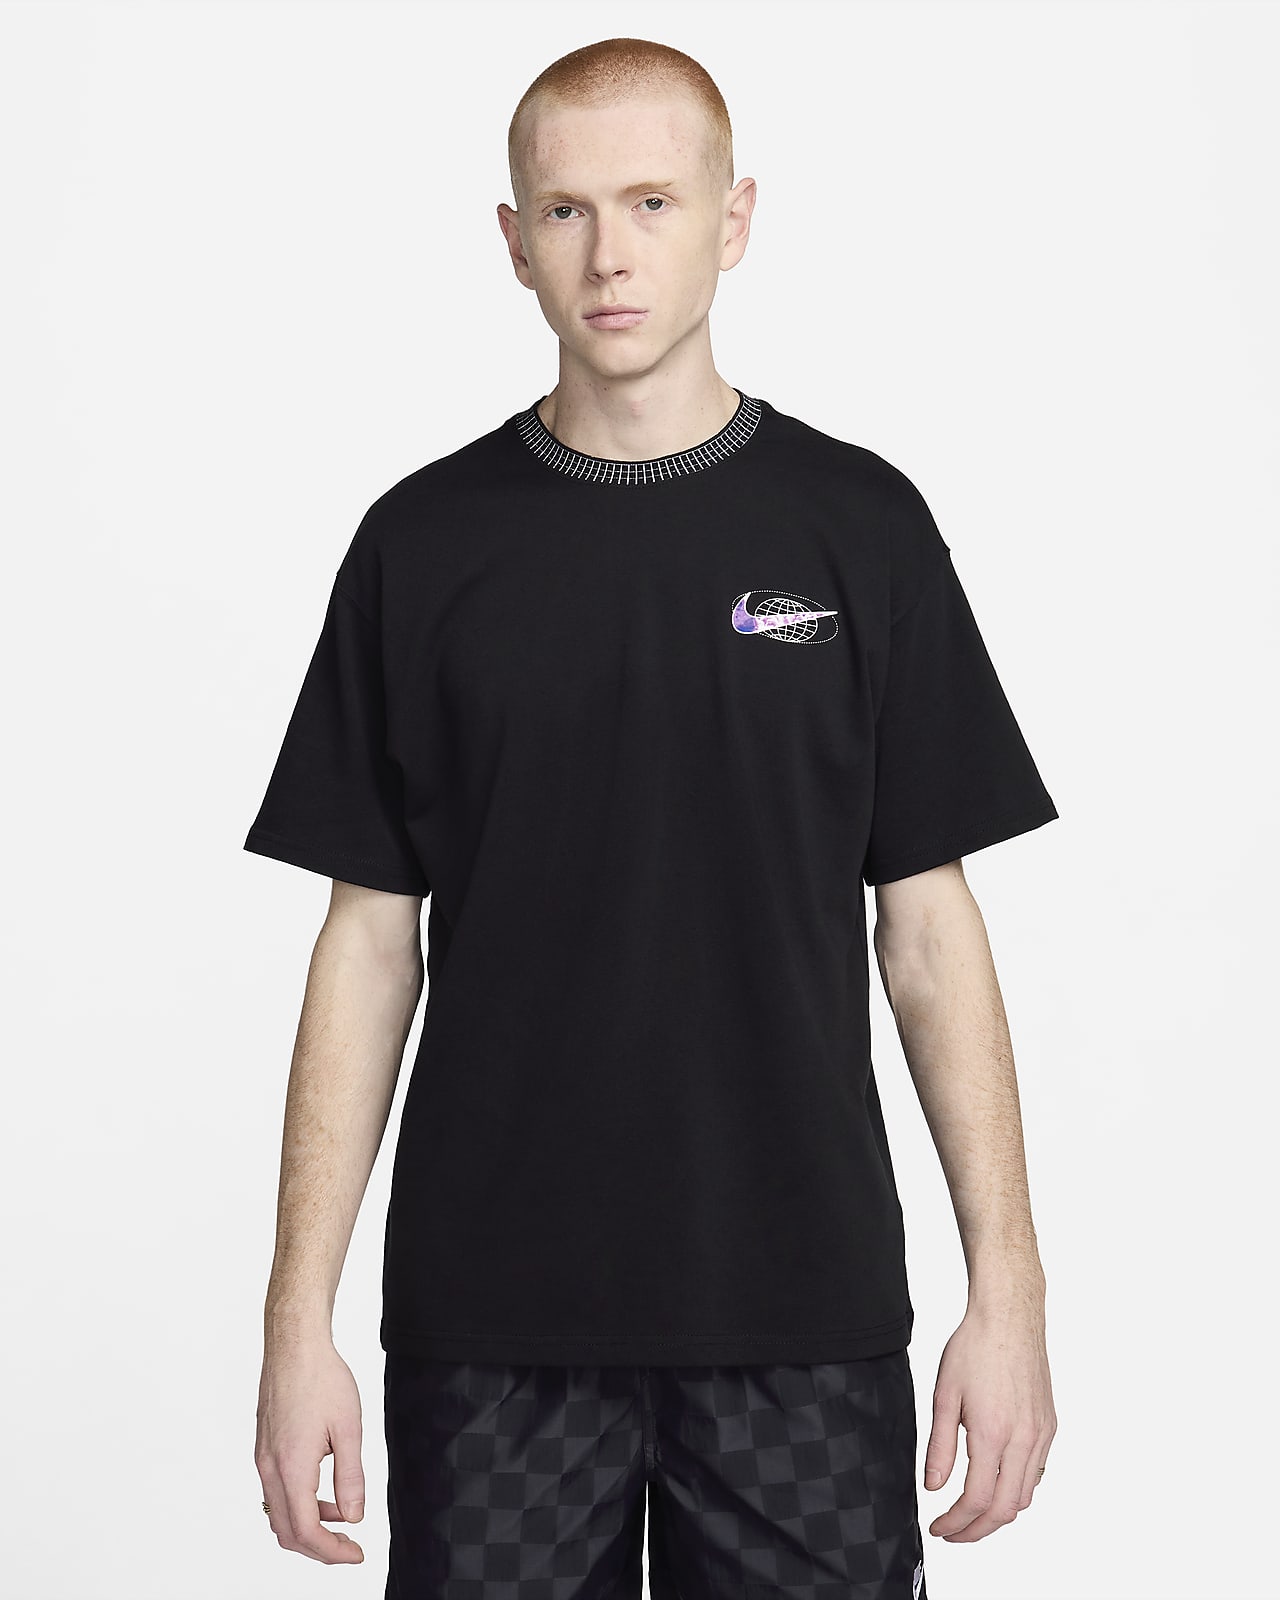 Nike Sportswear Men's Max90 T-Shirt